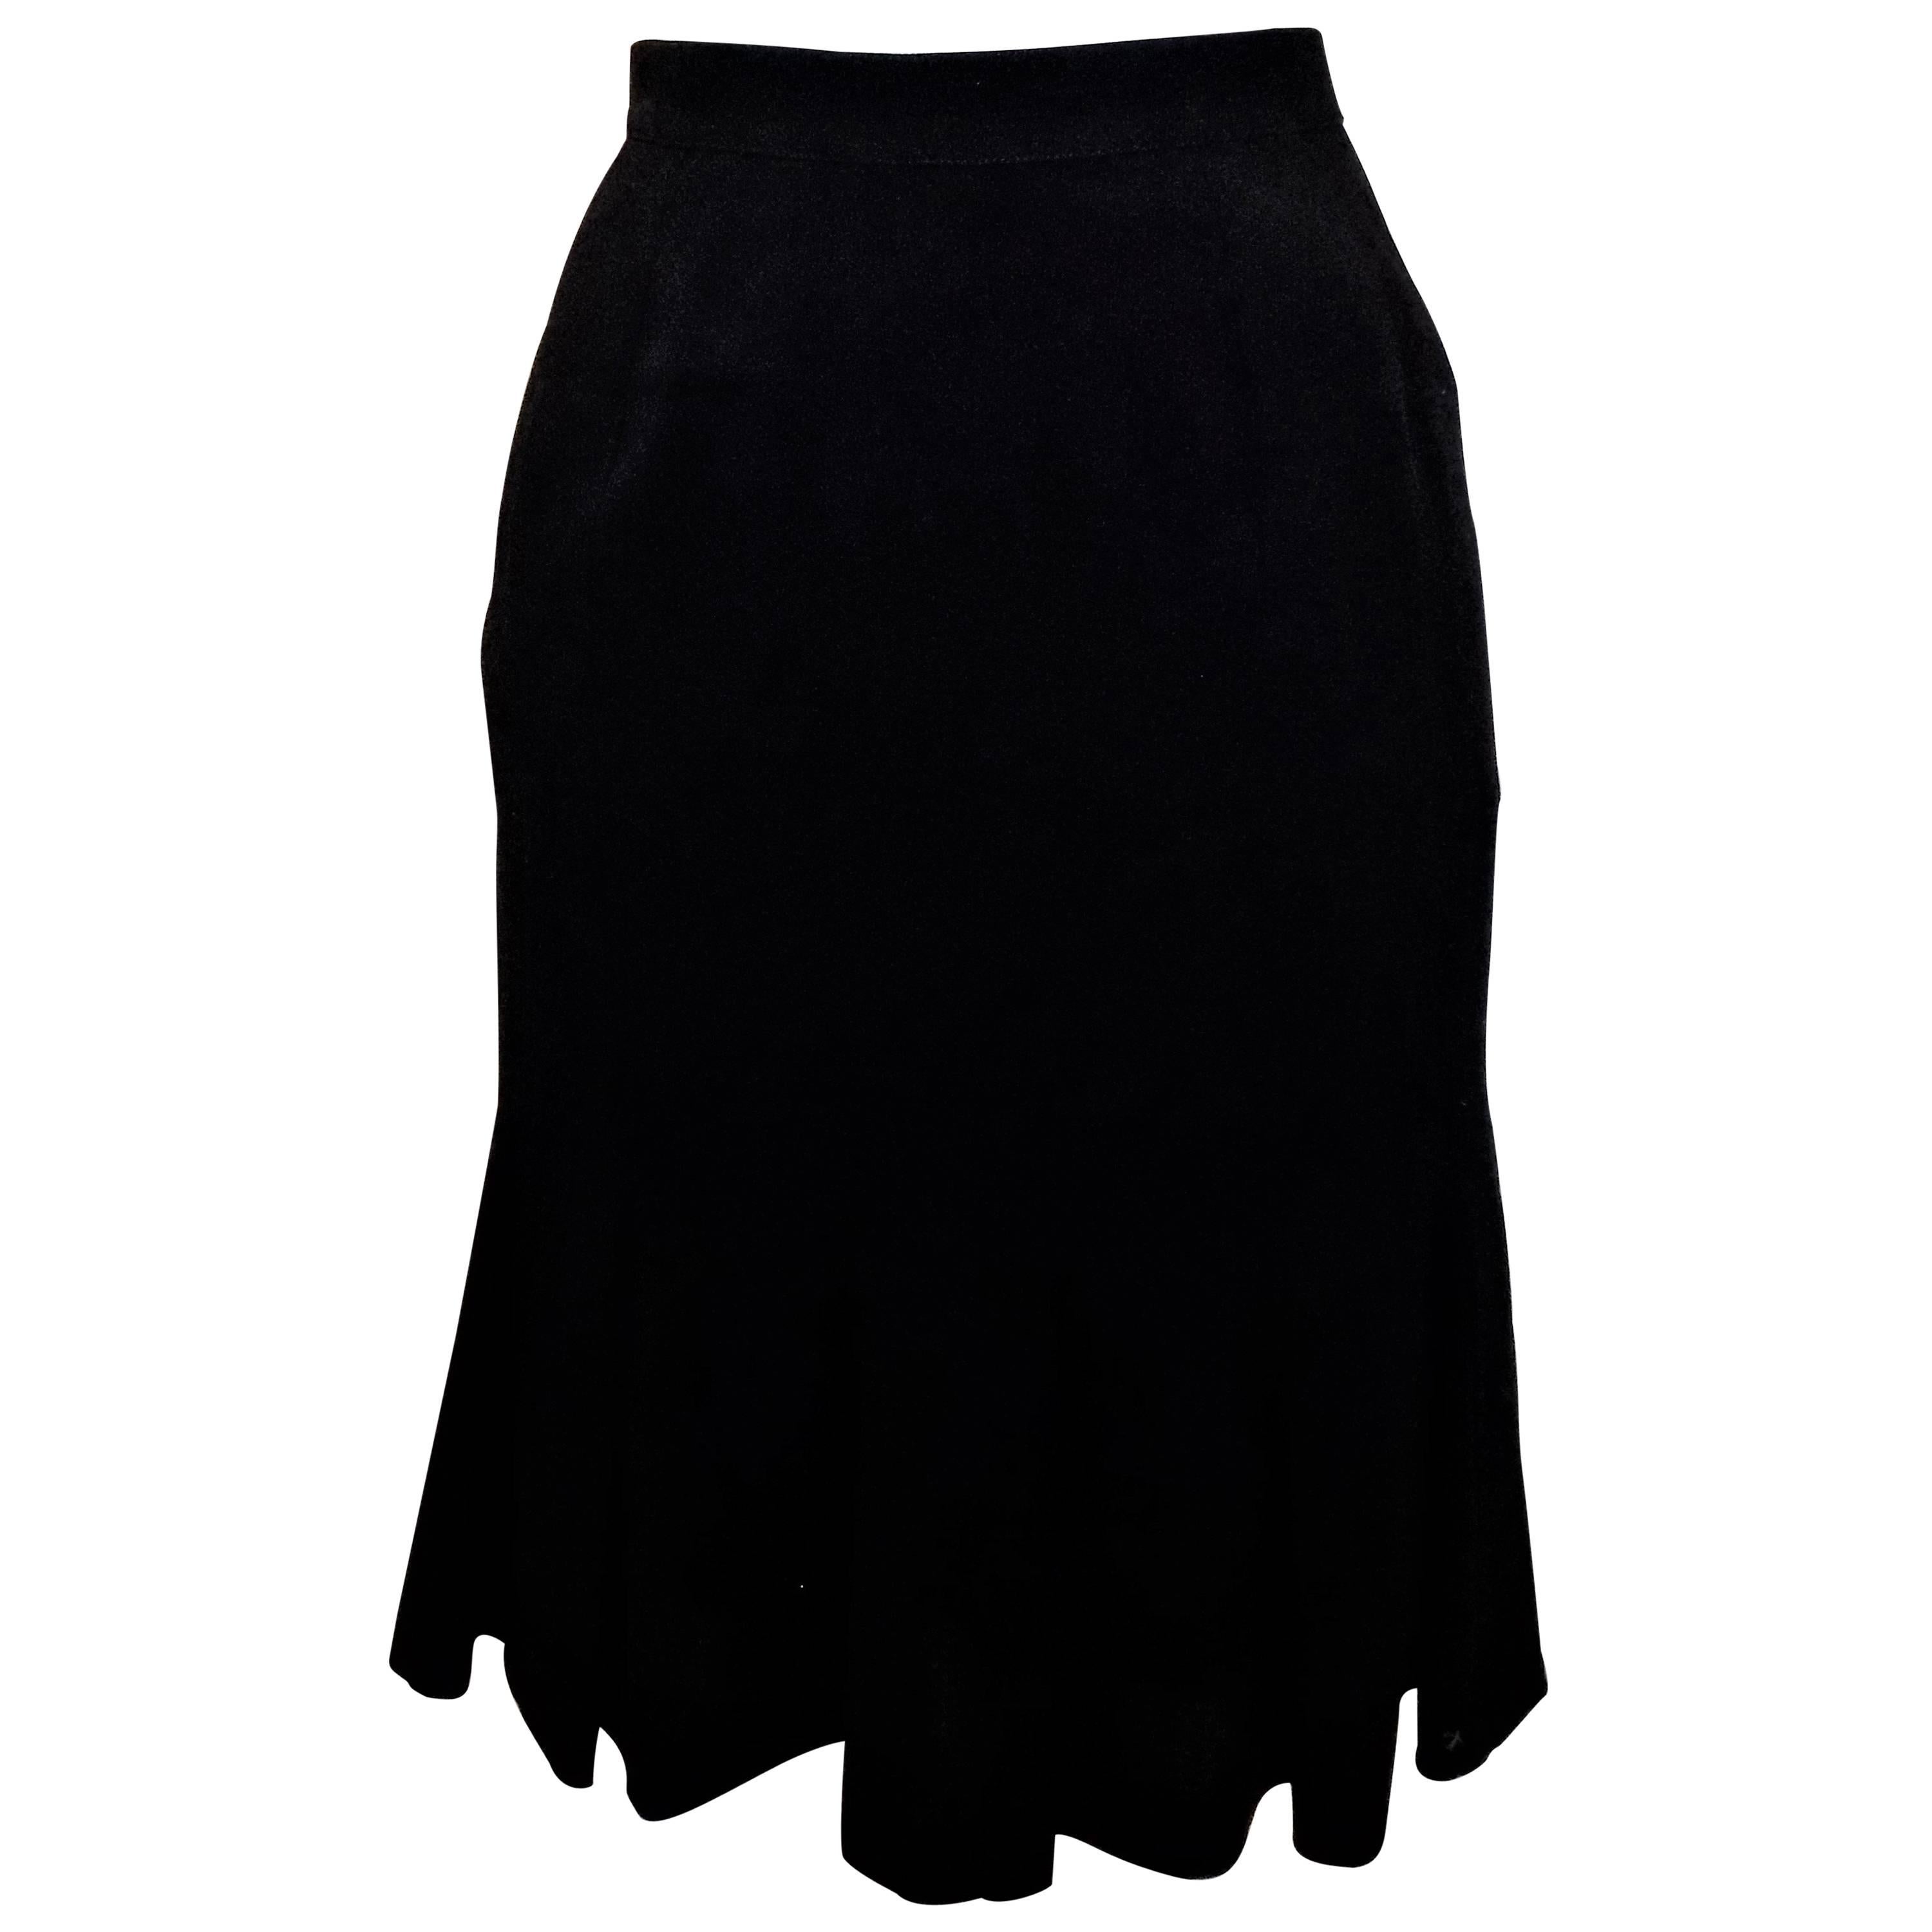 Chanel black kick pleat skirt